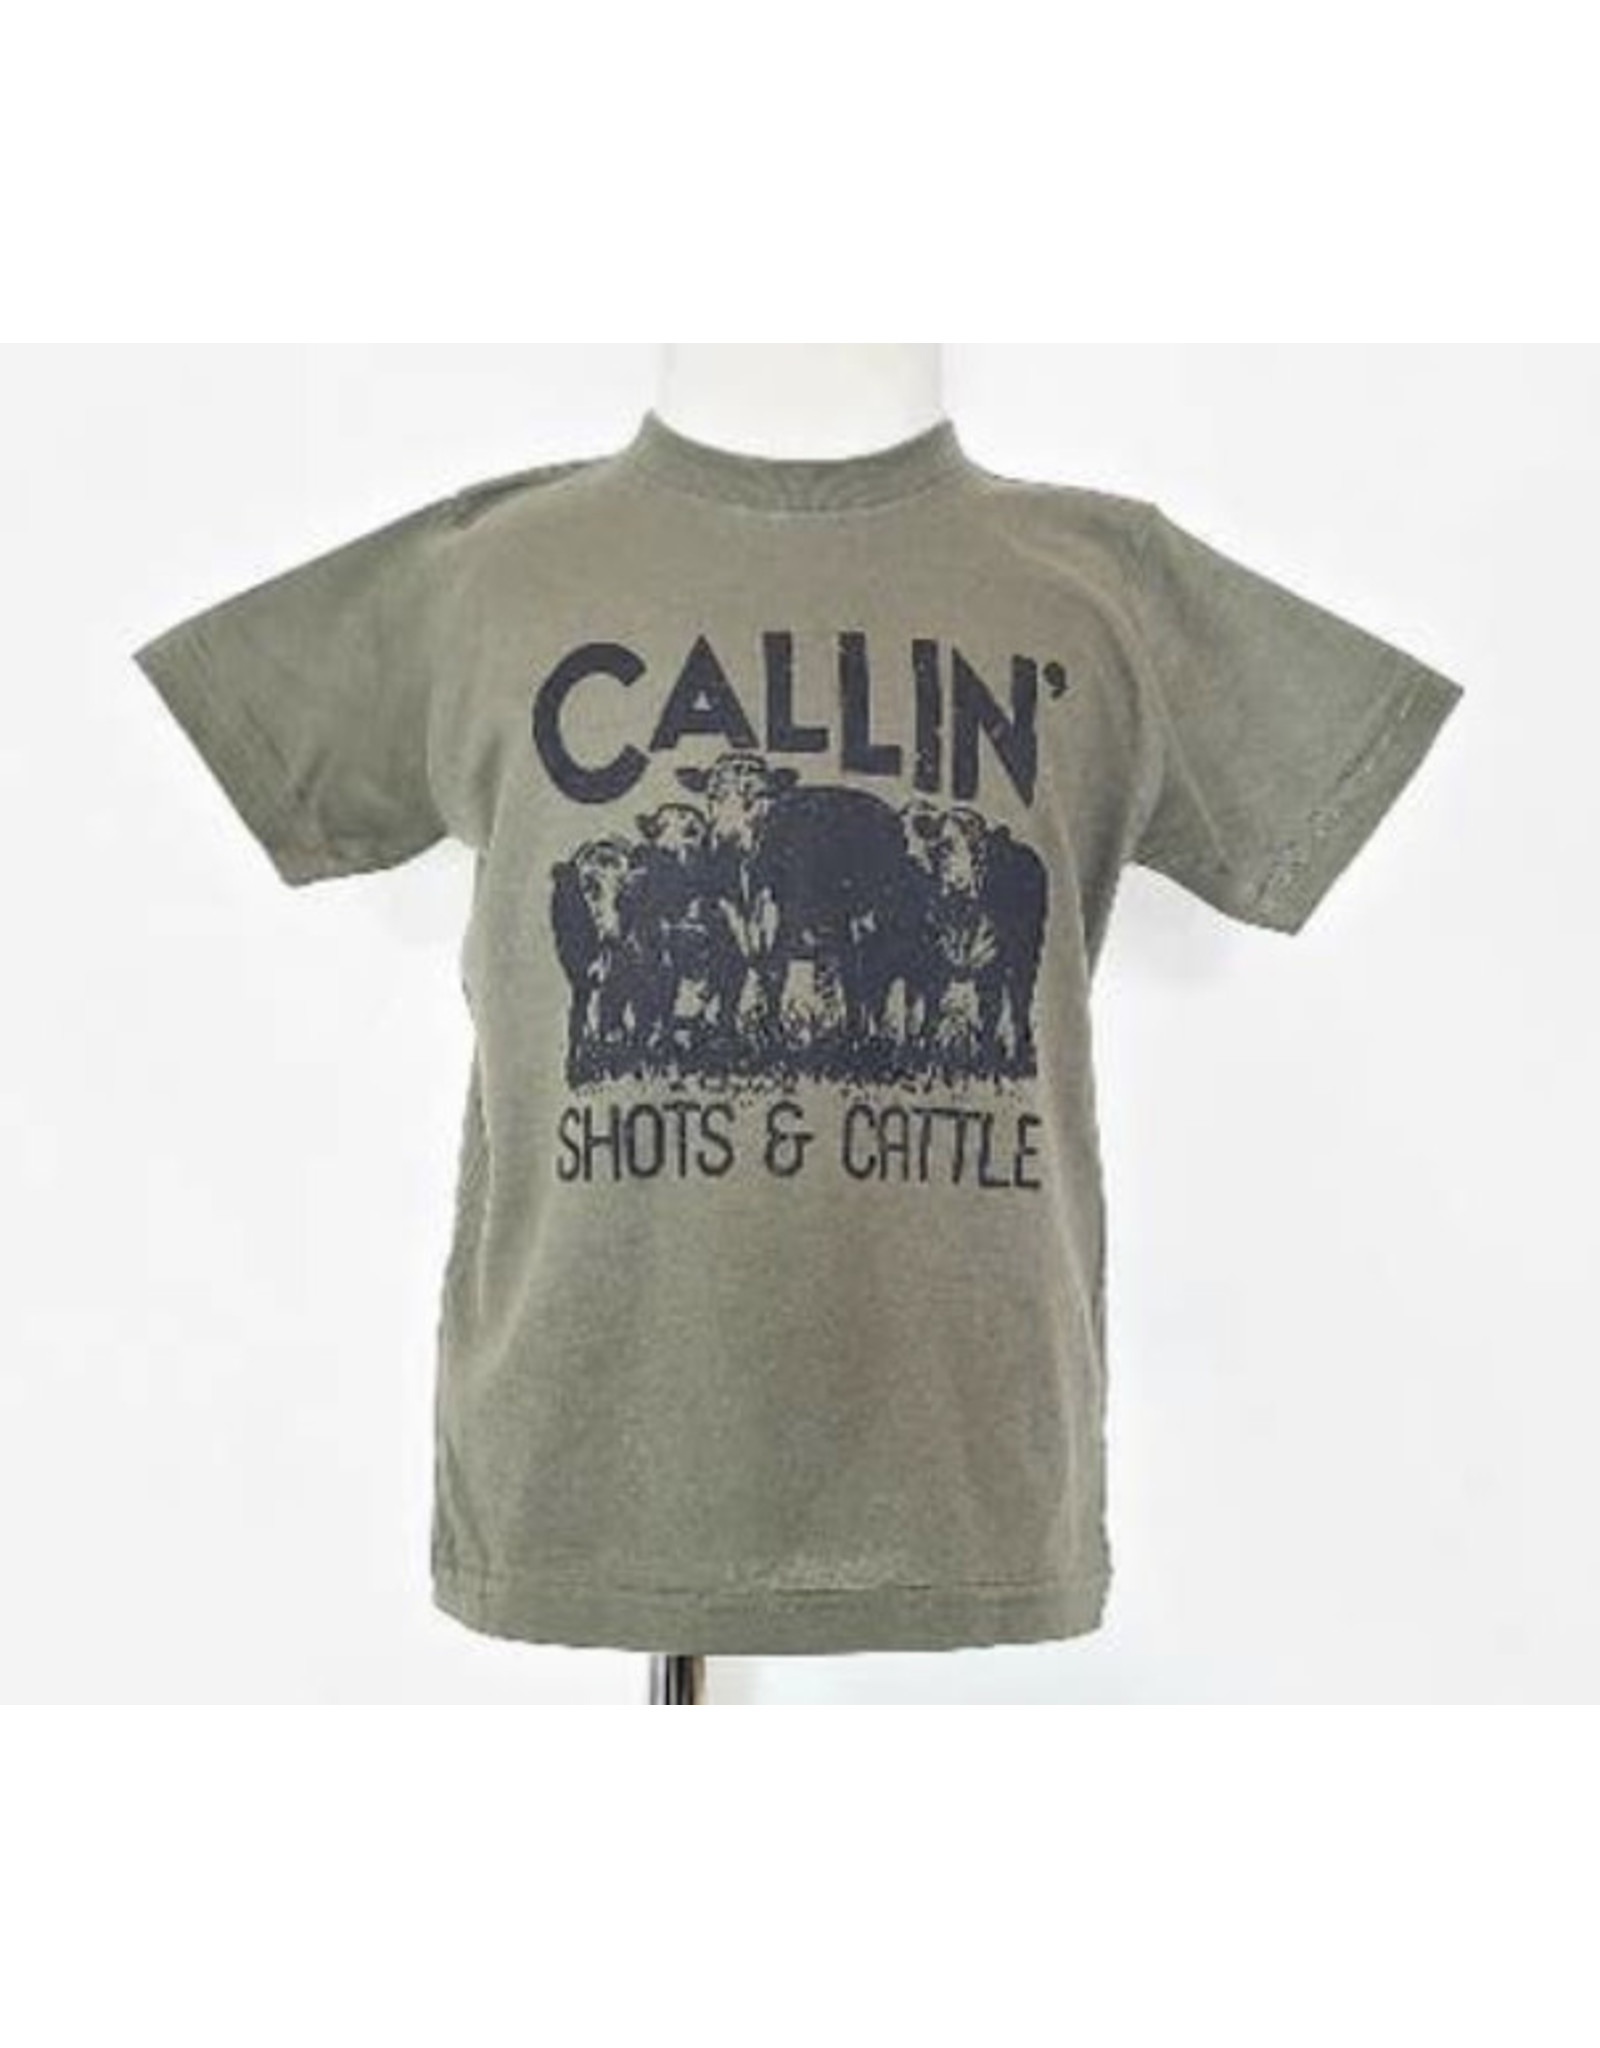 Callin' Shots & Cattle TShirt: Army Green